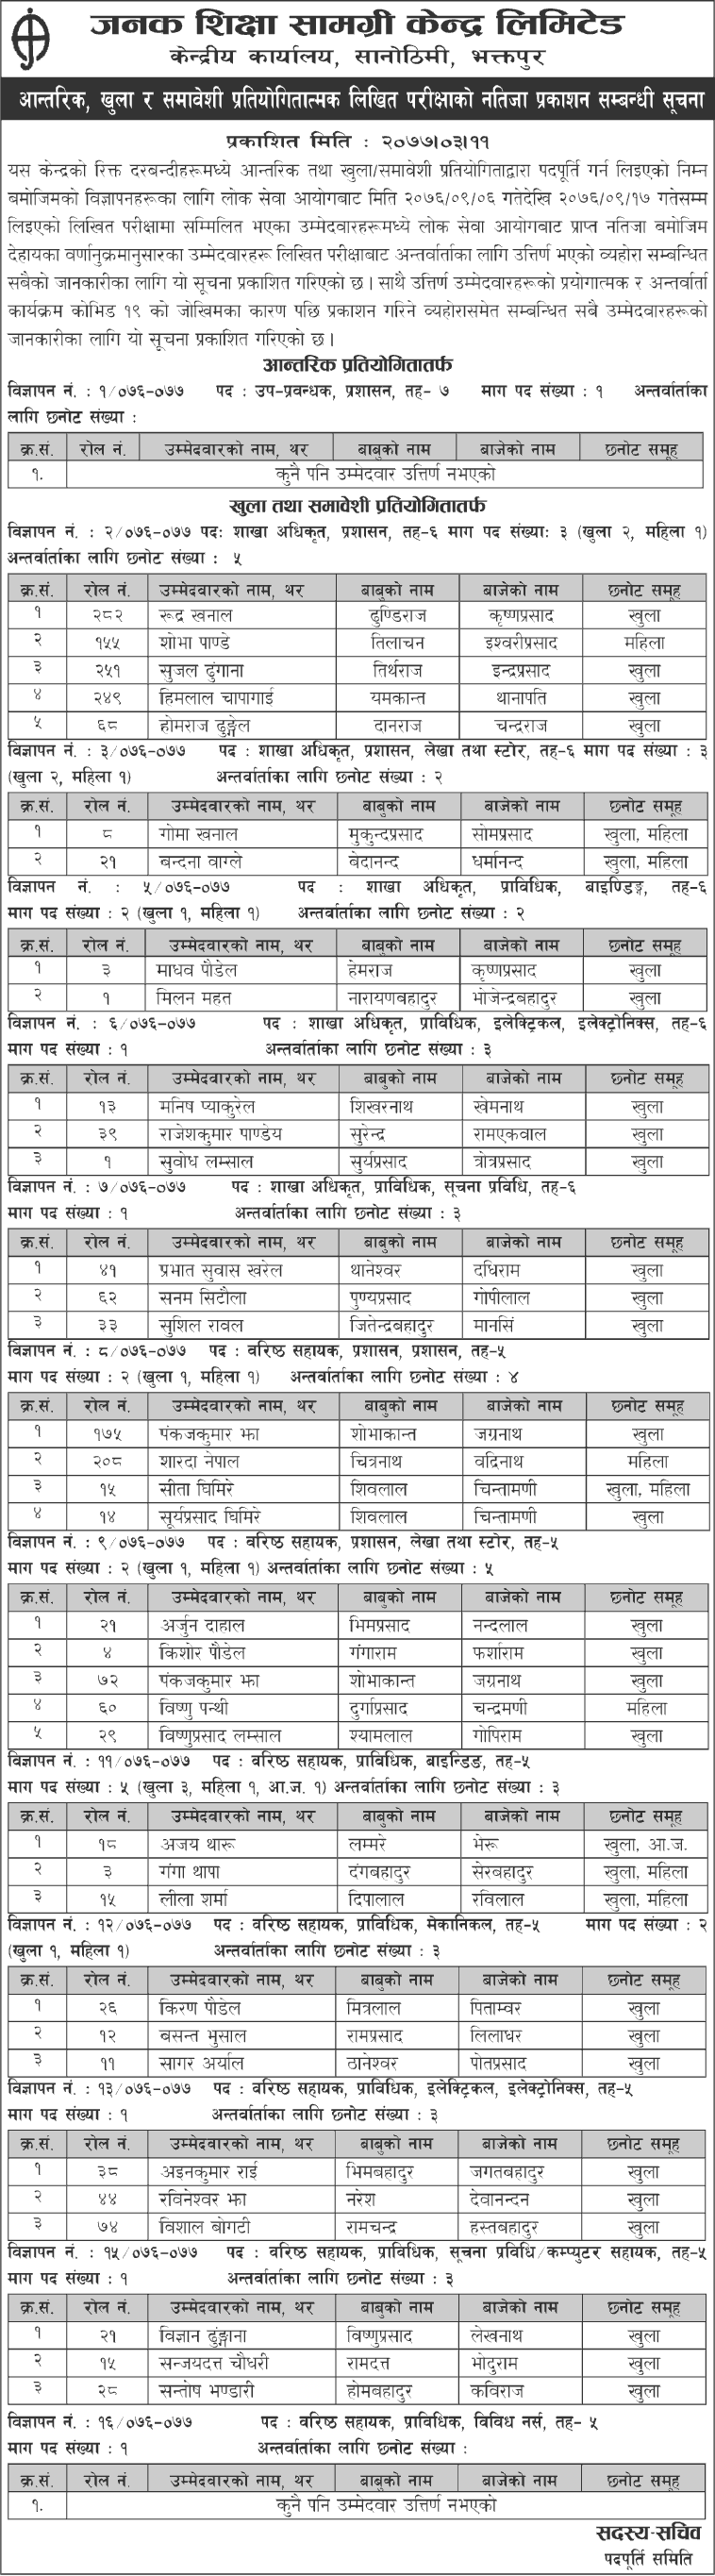 Written Exam Result of Various Posts of Janak Shiksha Samagri Kendra Limited